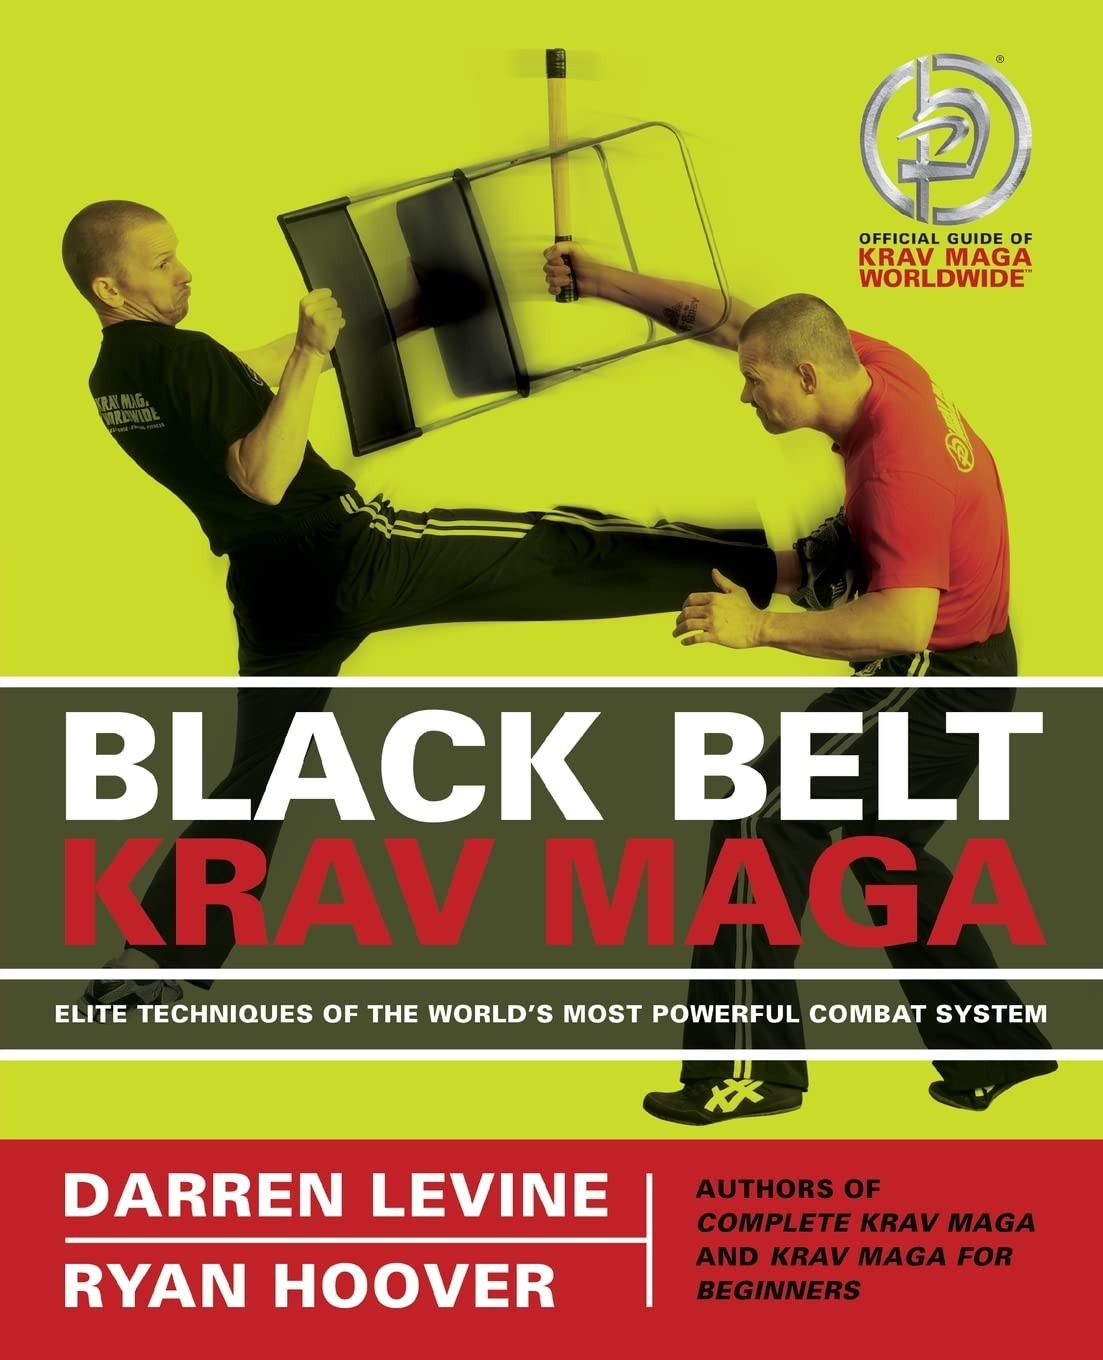 Black Belt Krav Maga Elite Techniques of the World’s Most Powerful Combat System